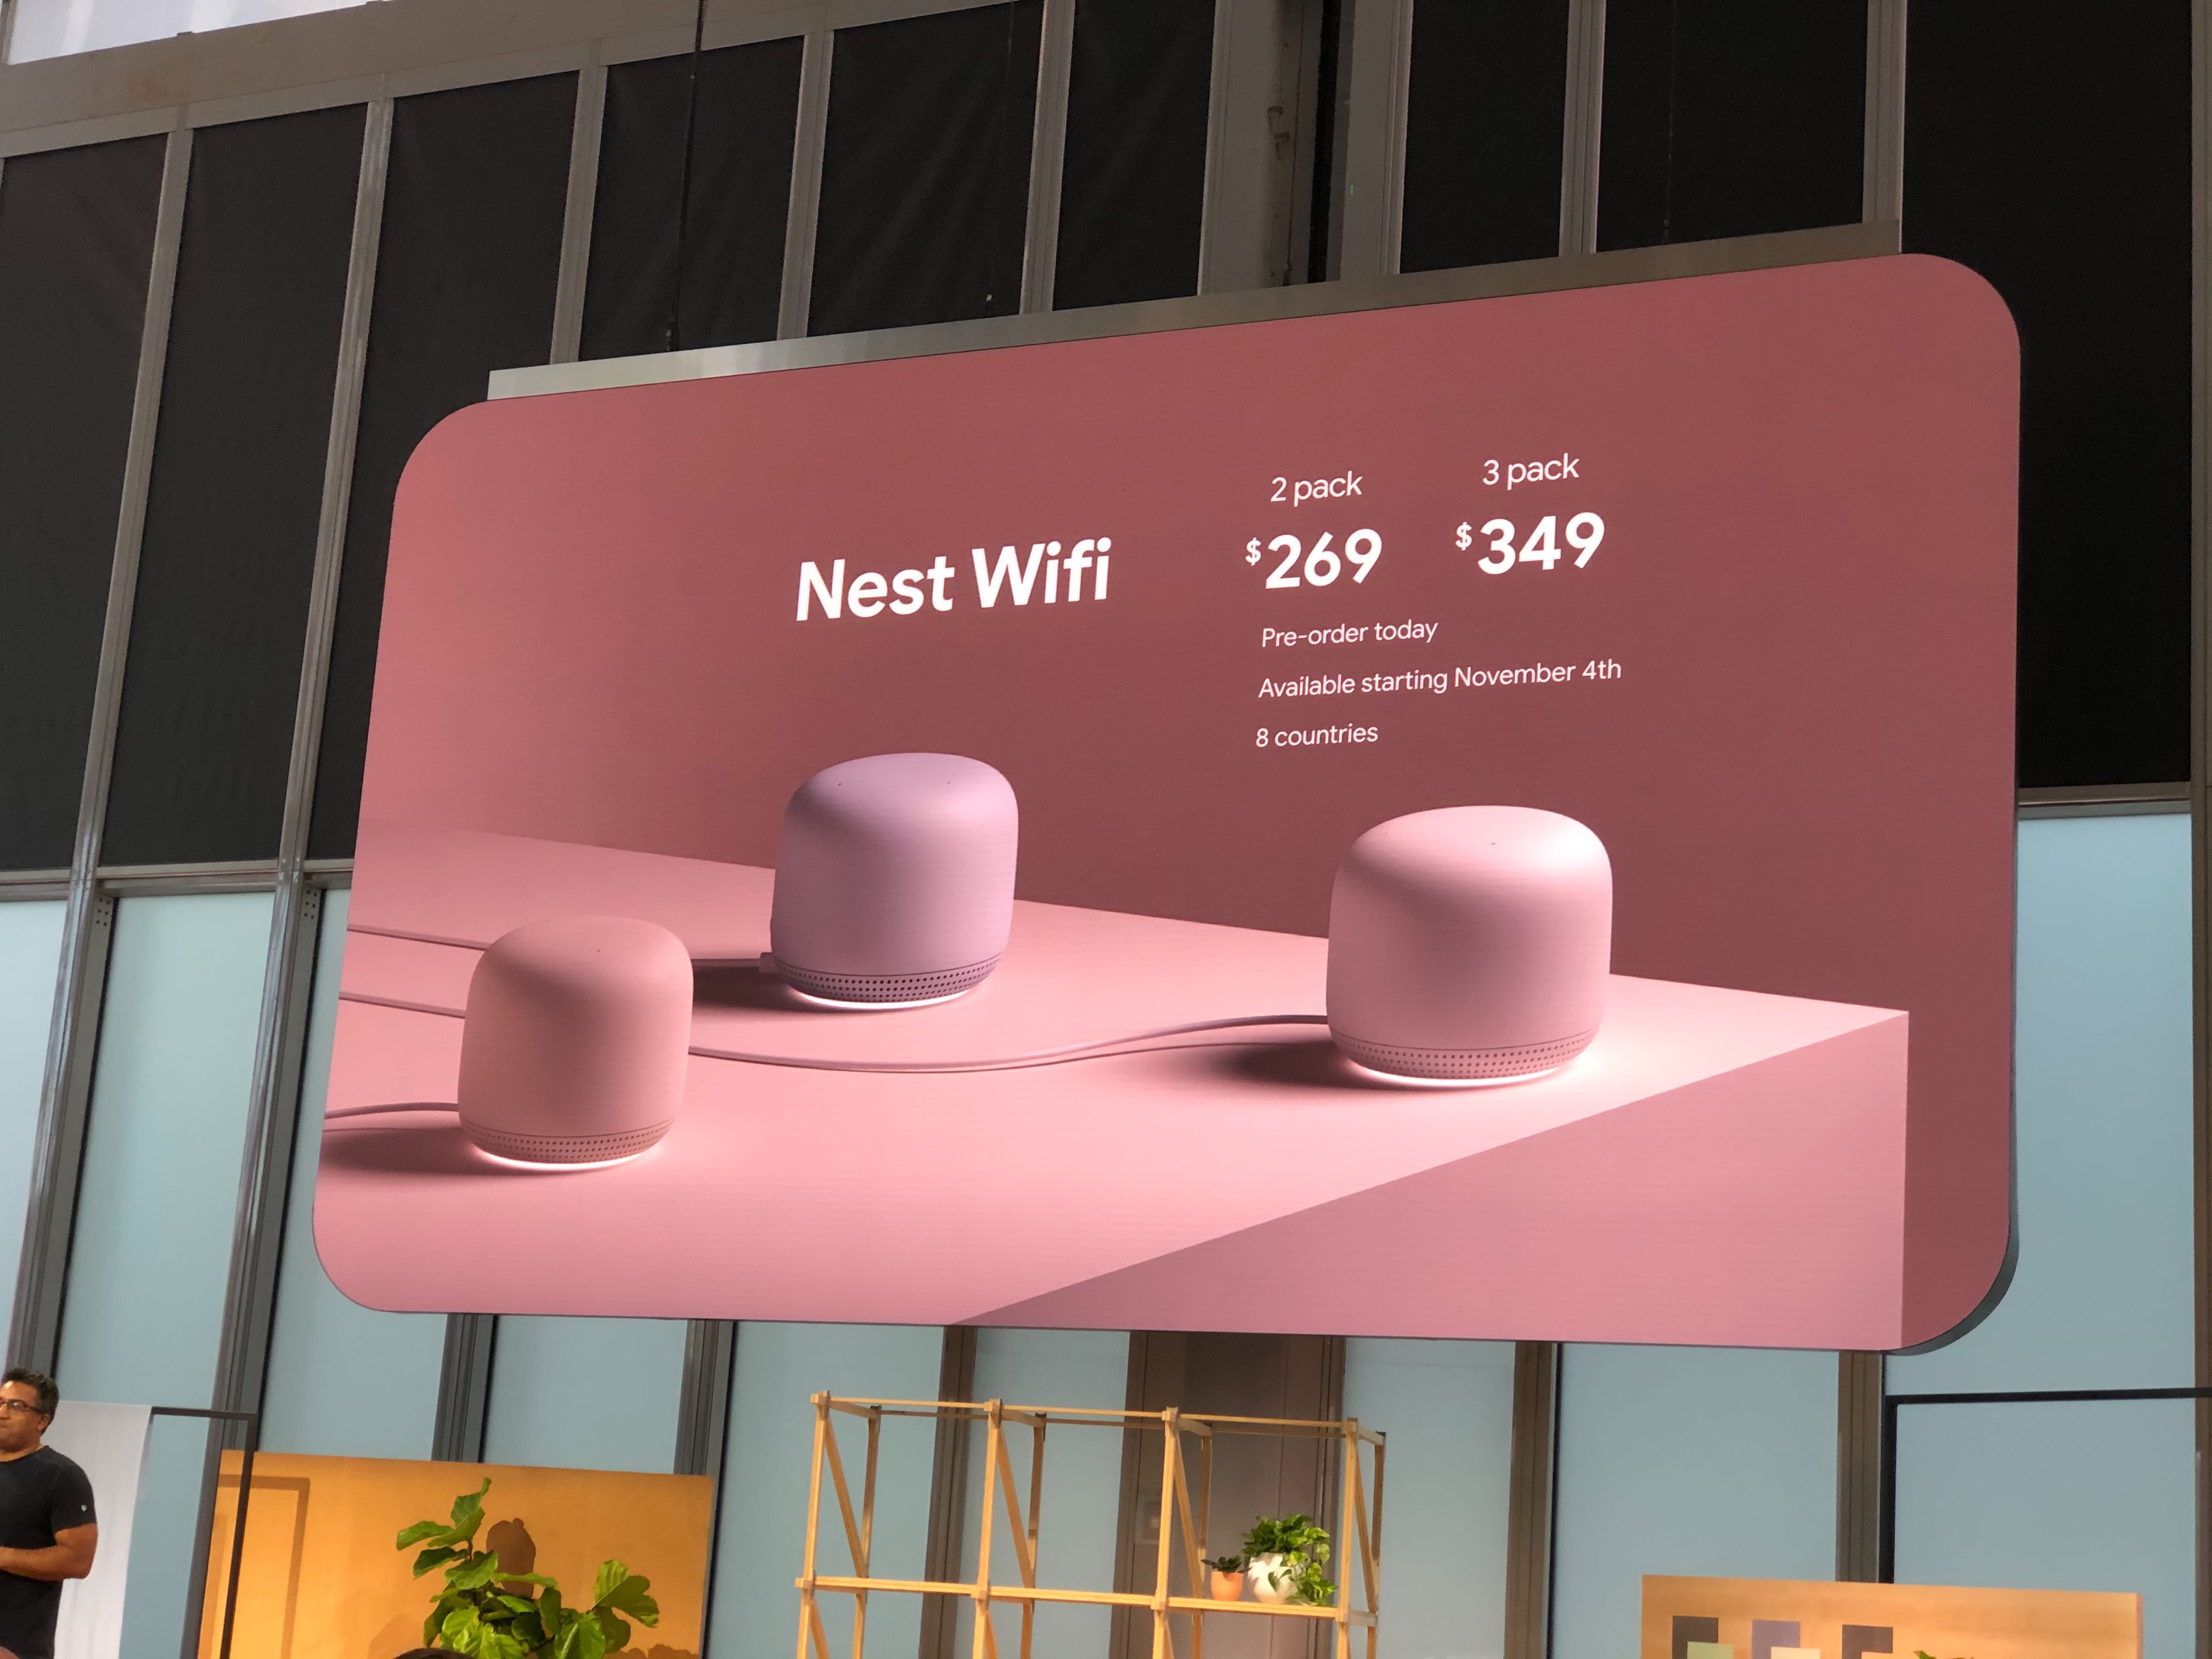 Google's Nest Wifi mesh and extender Google Assistant built-in | BetaNews